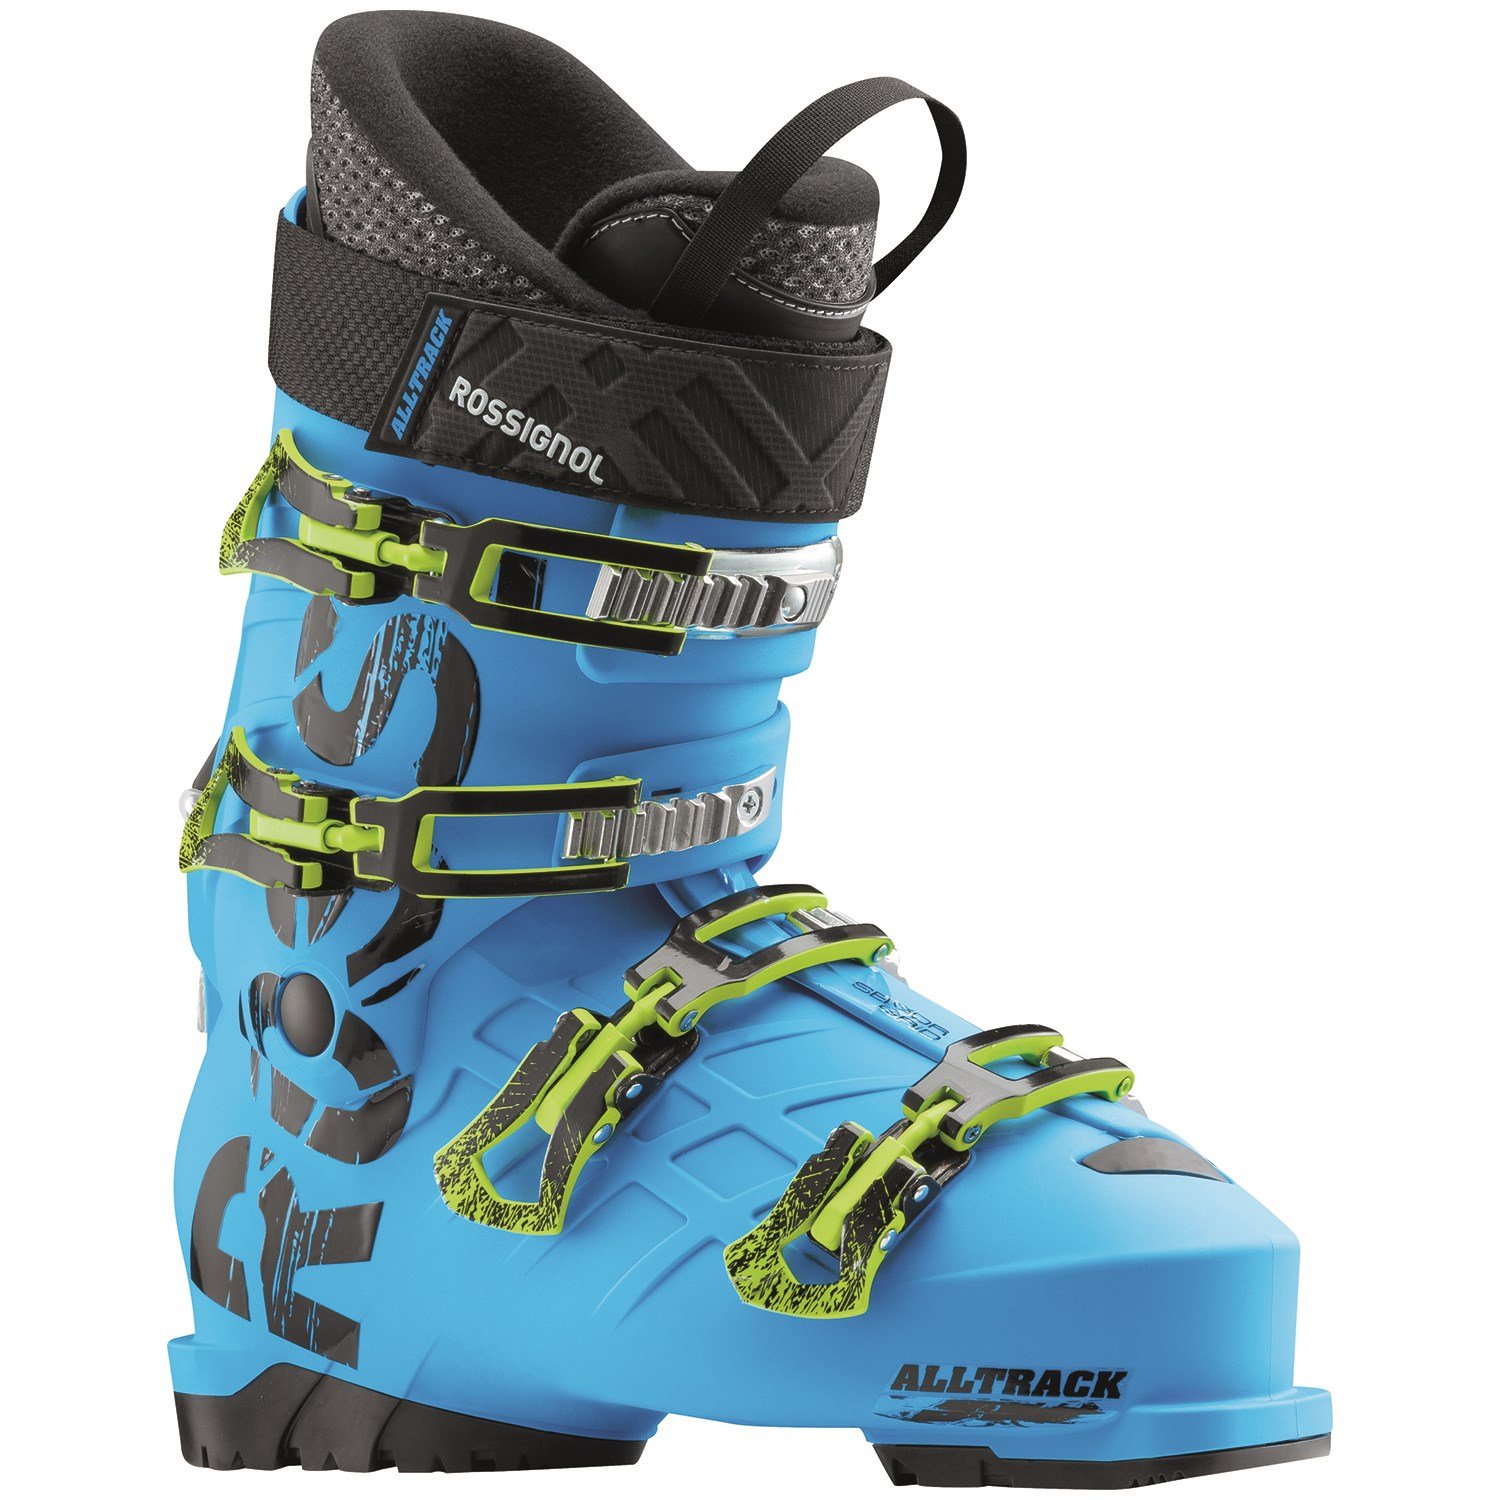 Rossignol Alltrack Rental Ski Boots 